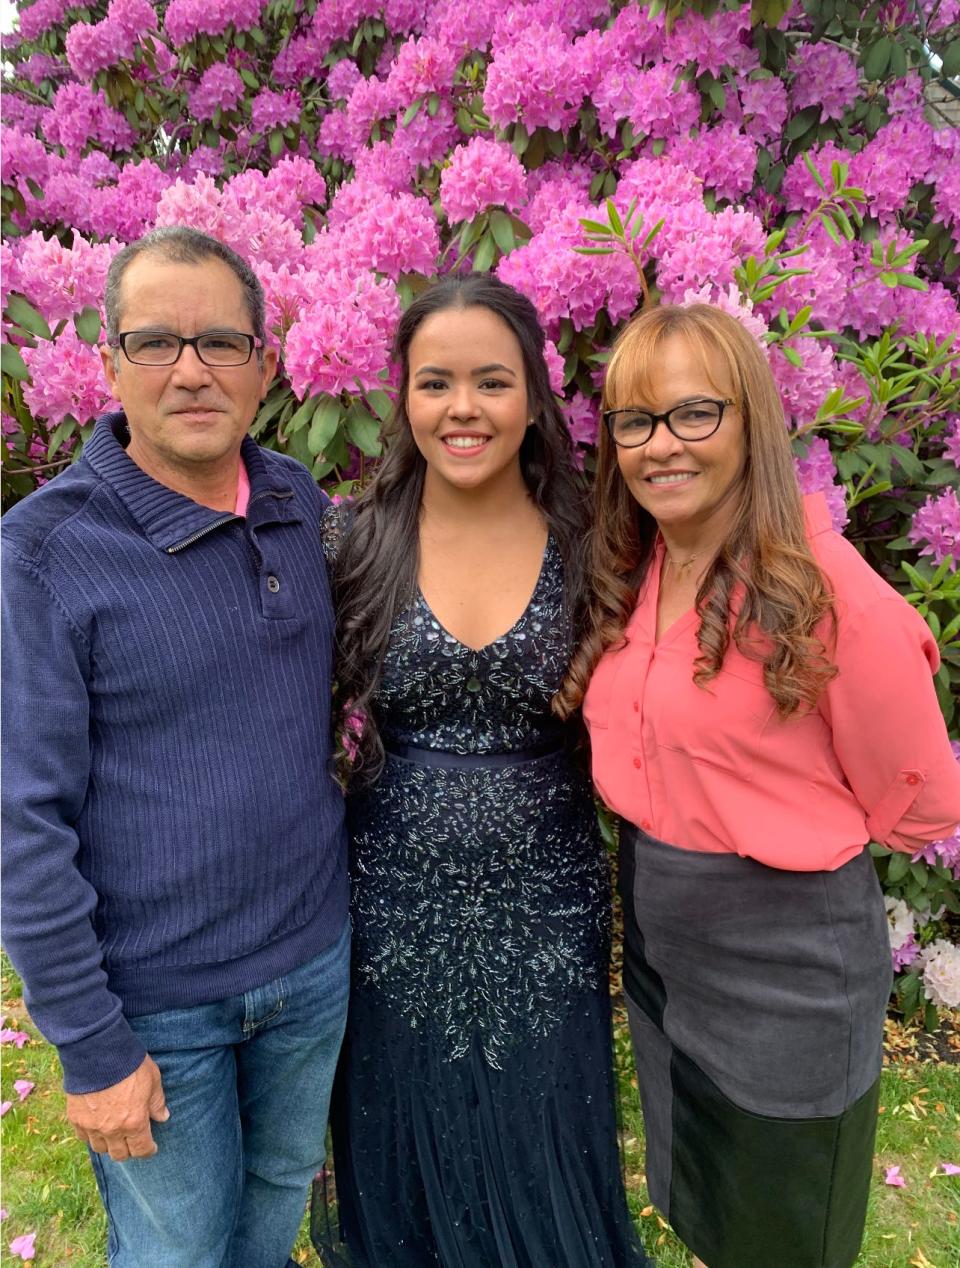 Tallya Maciel, center, with her father is Ecio Maciel and mother Antonia (Tuca) Maciel.